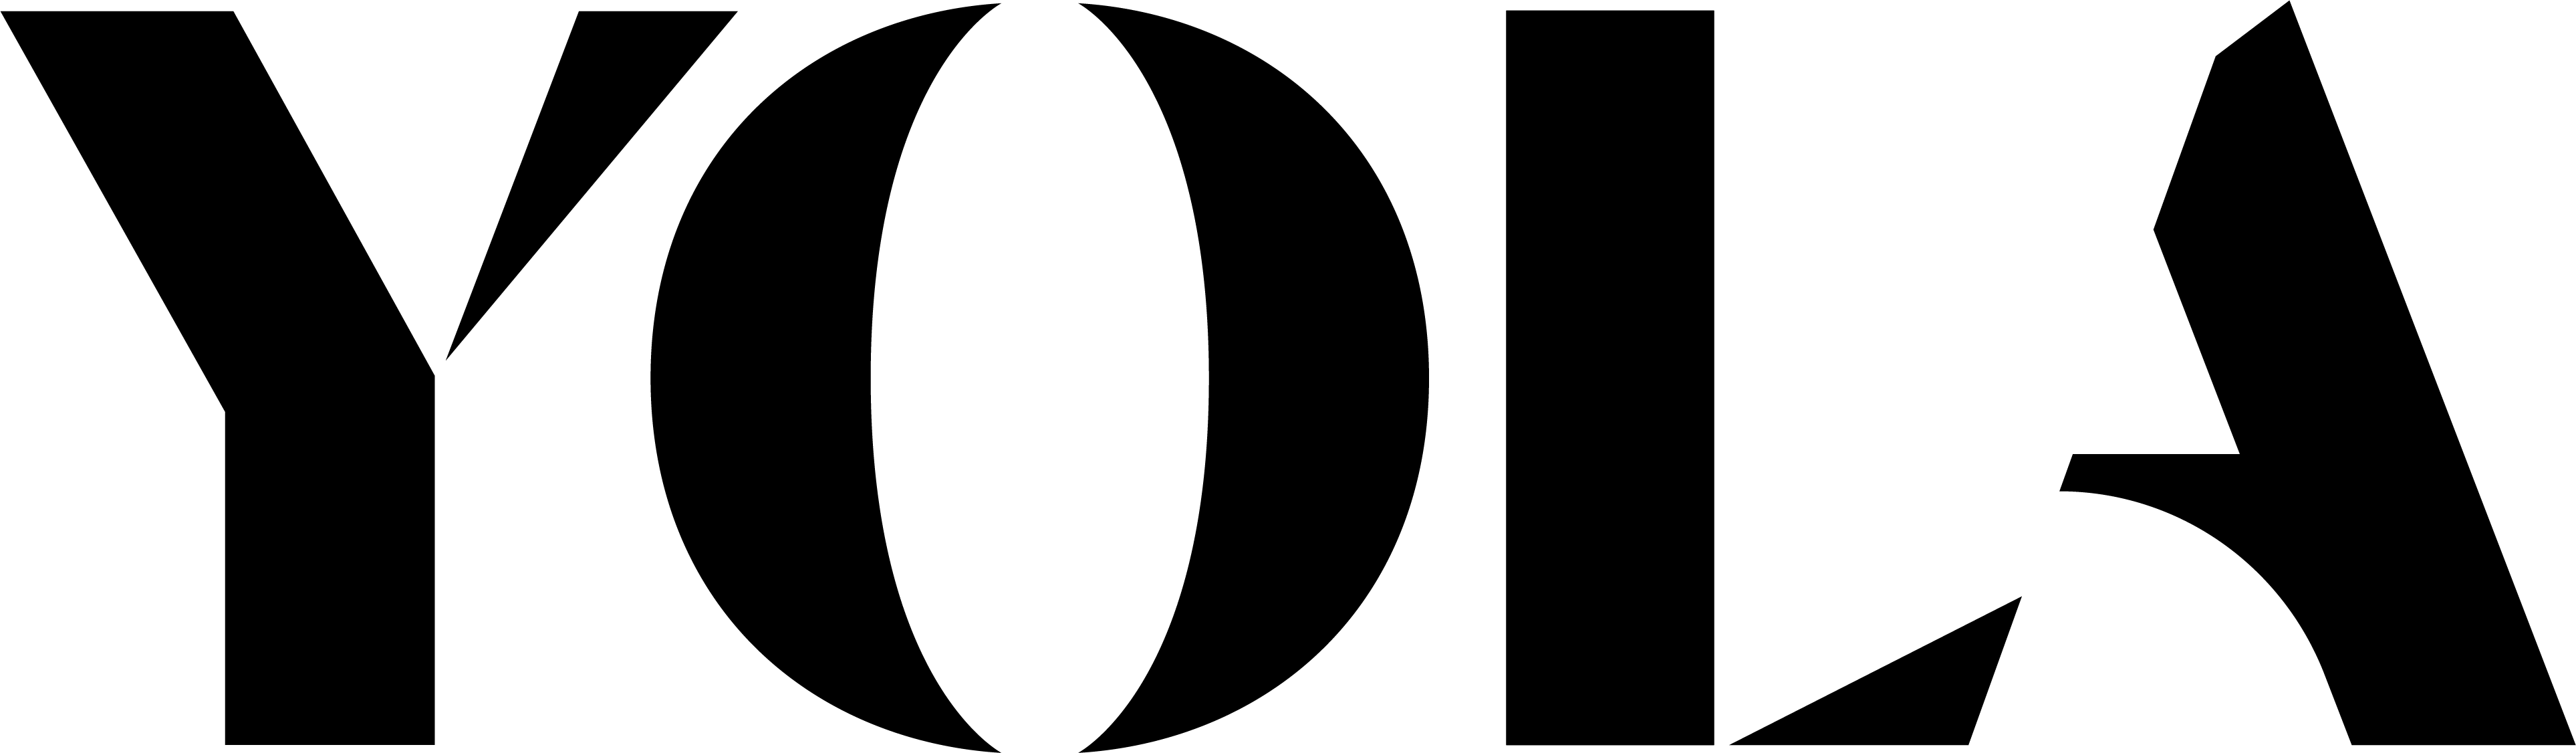 Parade Clipart Band Orchestra - Yola Logo (3854x1126)